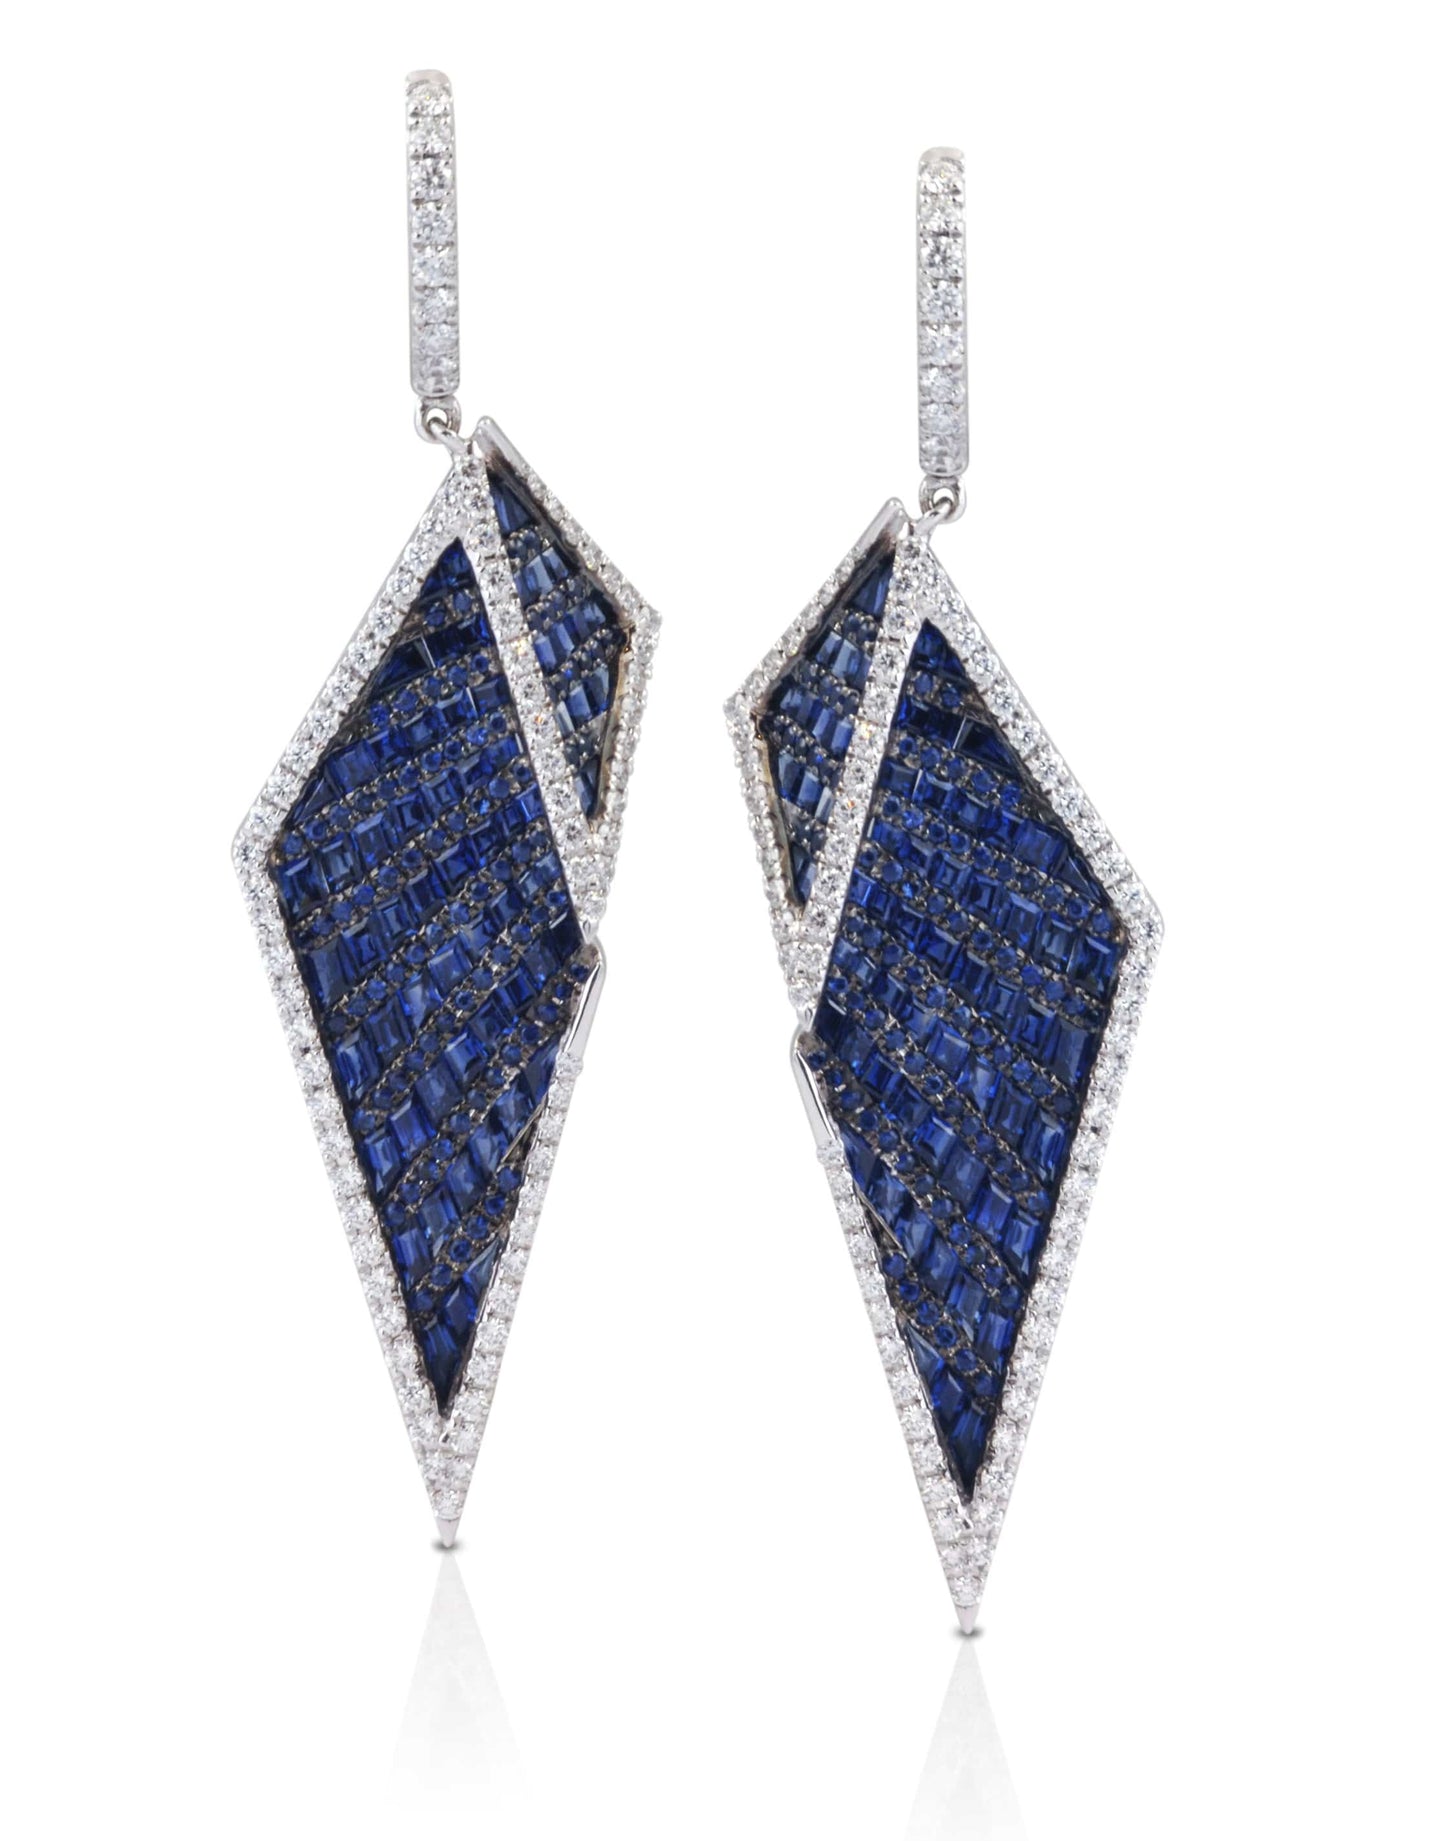 KAVANT & SHARART-Blue Sapphire and Diamond Origami Earrings-WHITE GOLD